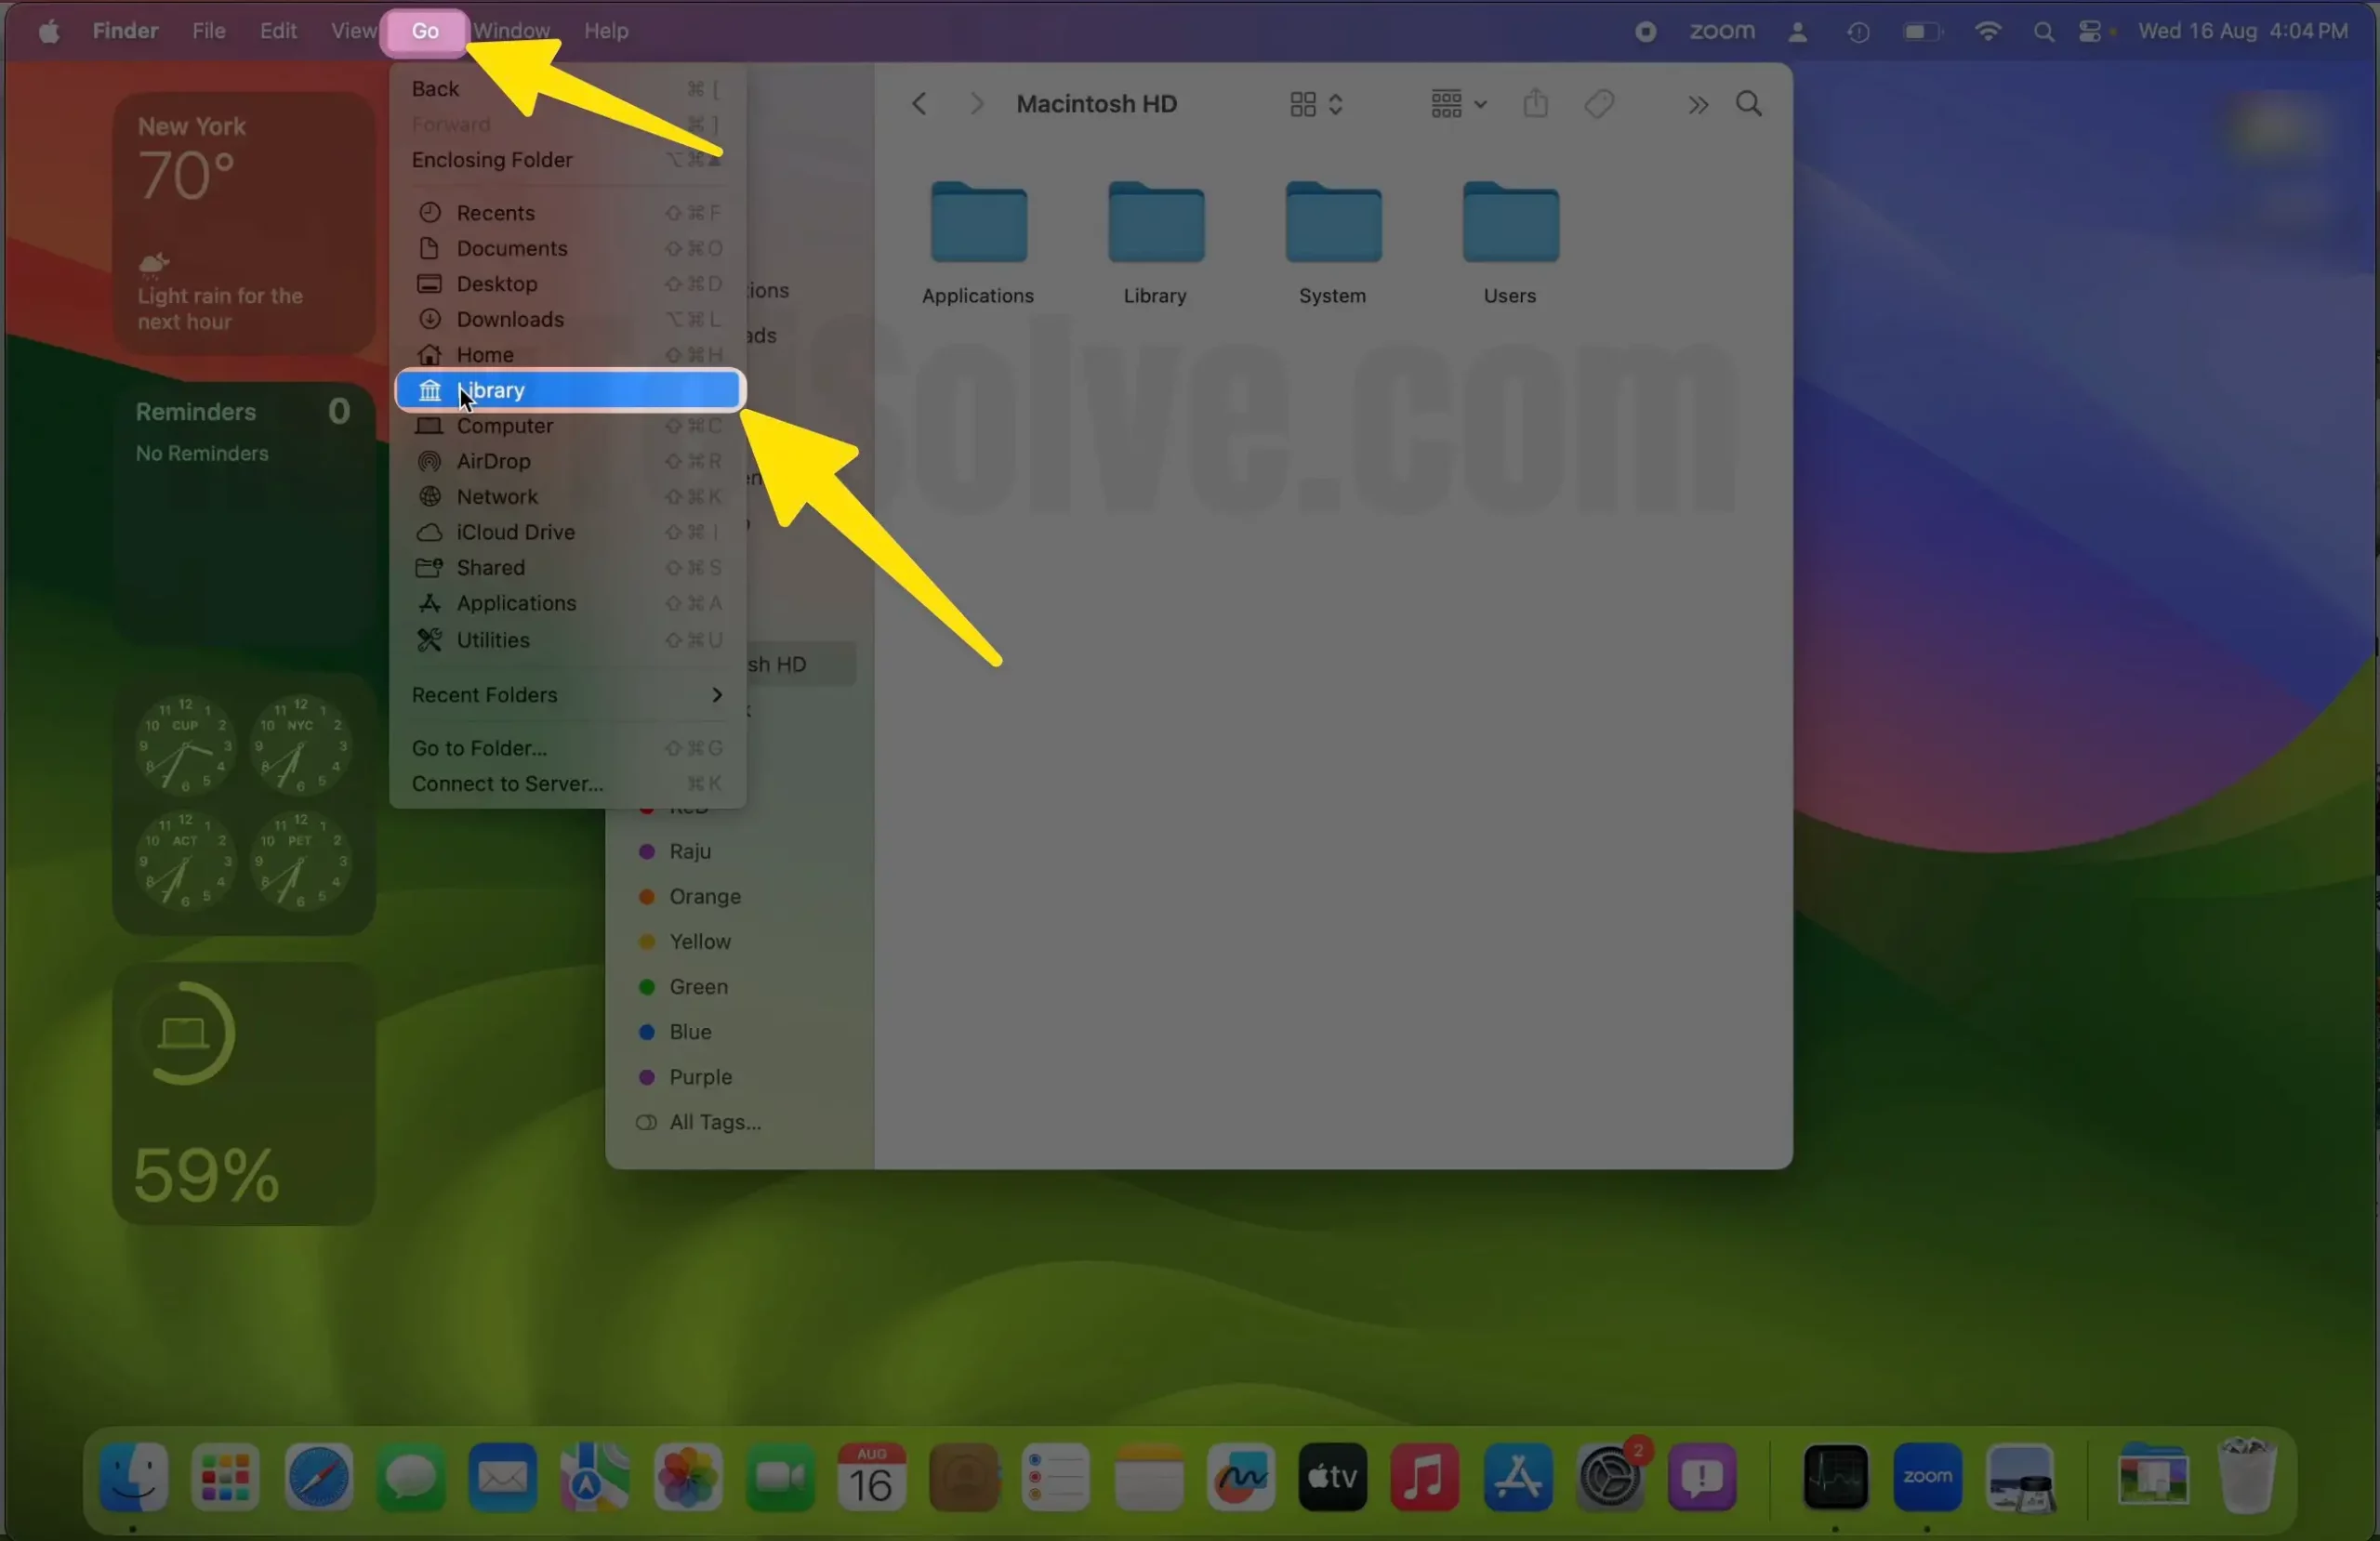 Open Library Folder on Mac Finder